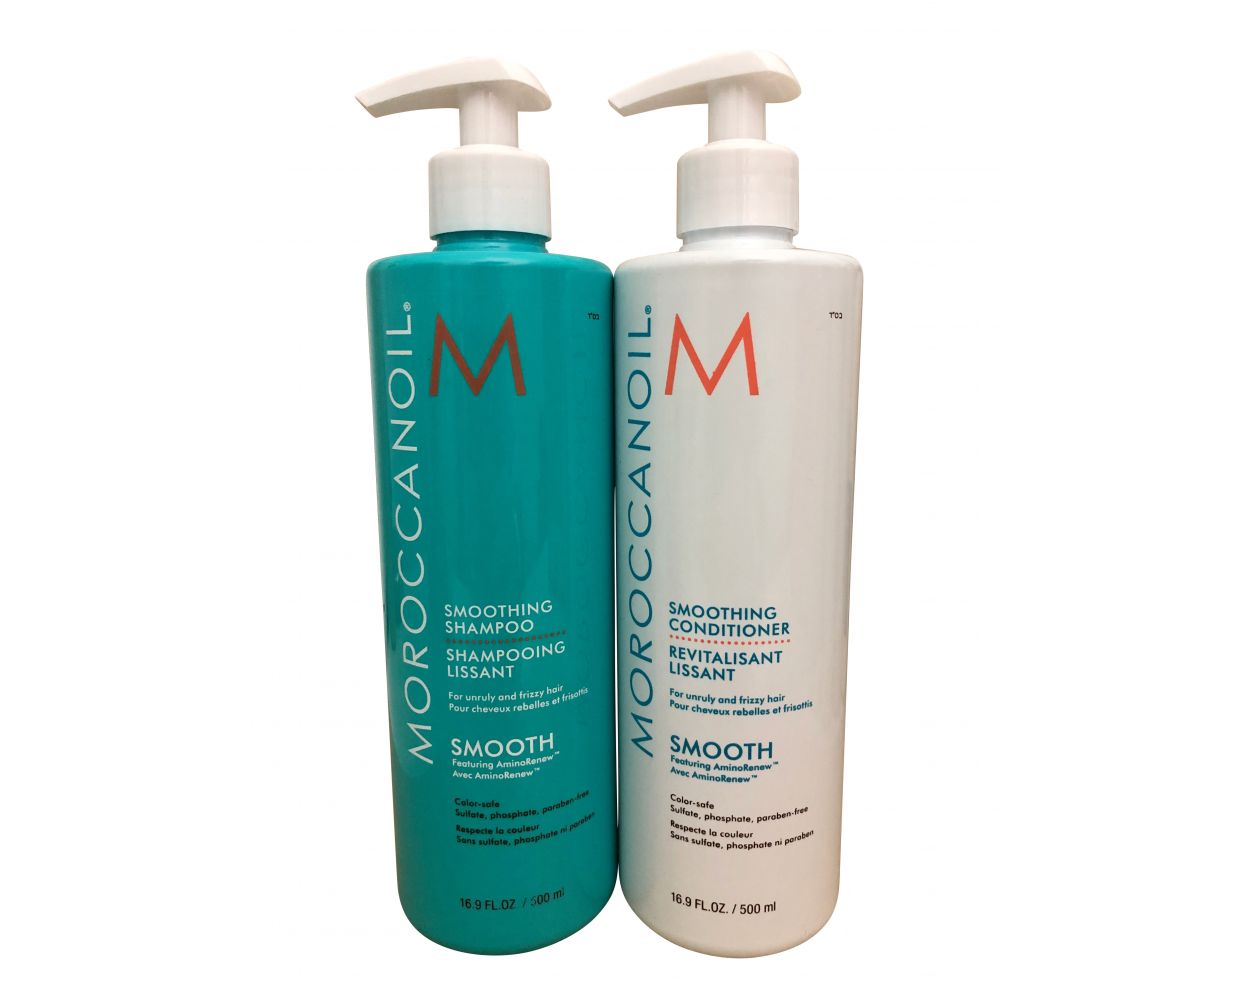 medaljevinder retort I forhold Moroccanoil Smoothing Shampoo & Conditioner DUO | Shampoo - Beautyvice.com